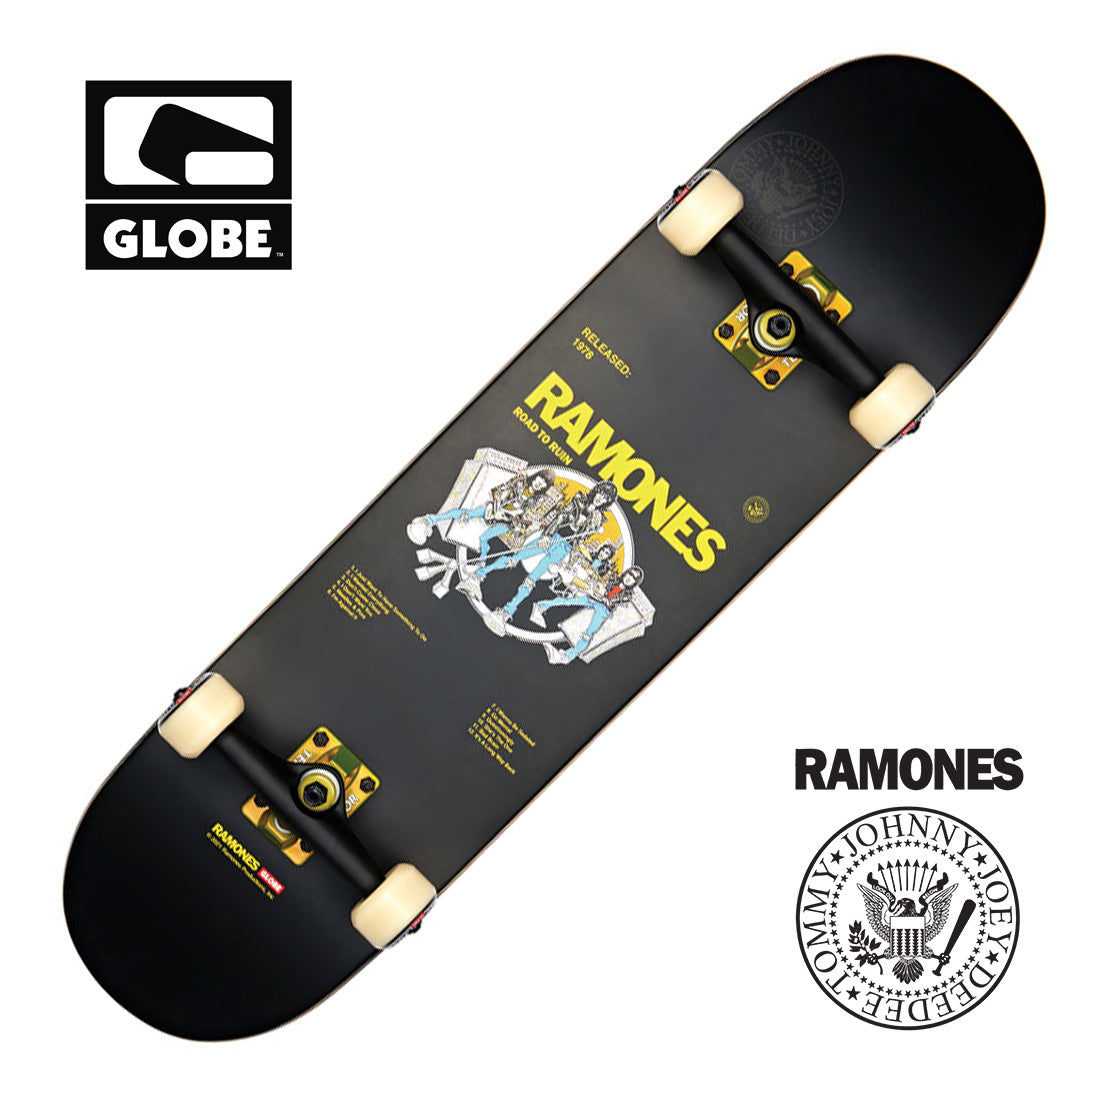 Globe G2 Ramones 8.25 Complete - Road to Ruin Skateboard Completes Modern Street